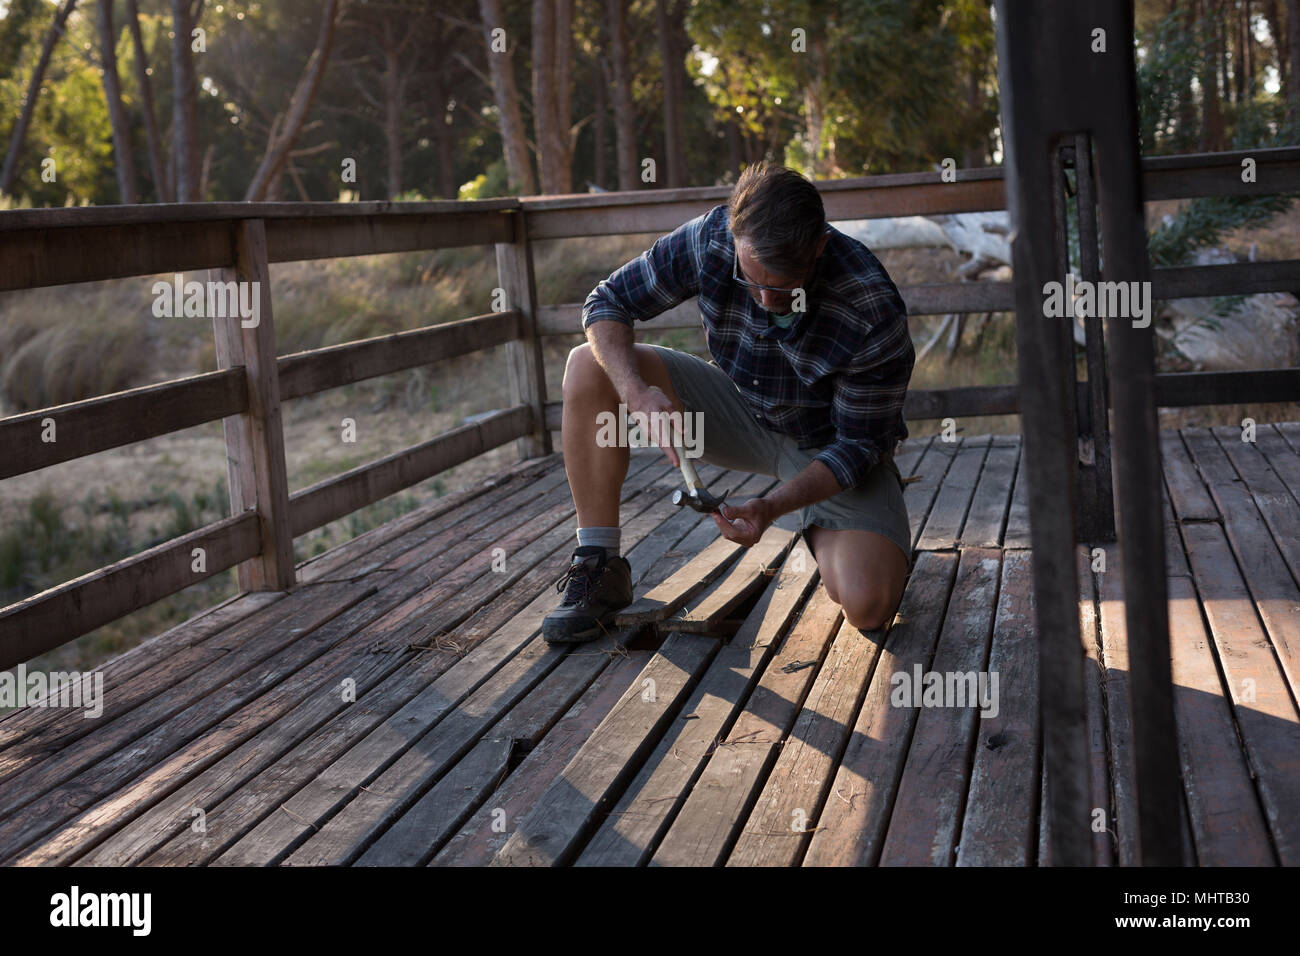 Man removing hardwood floors of cabin porch Stock Photo